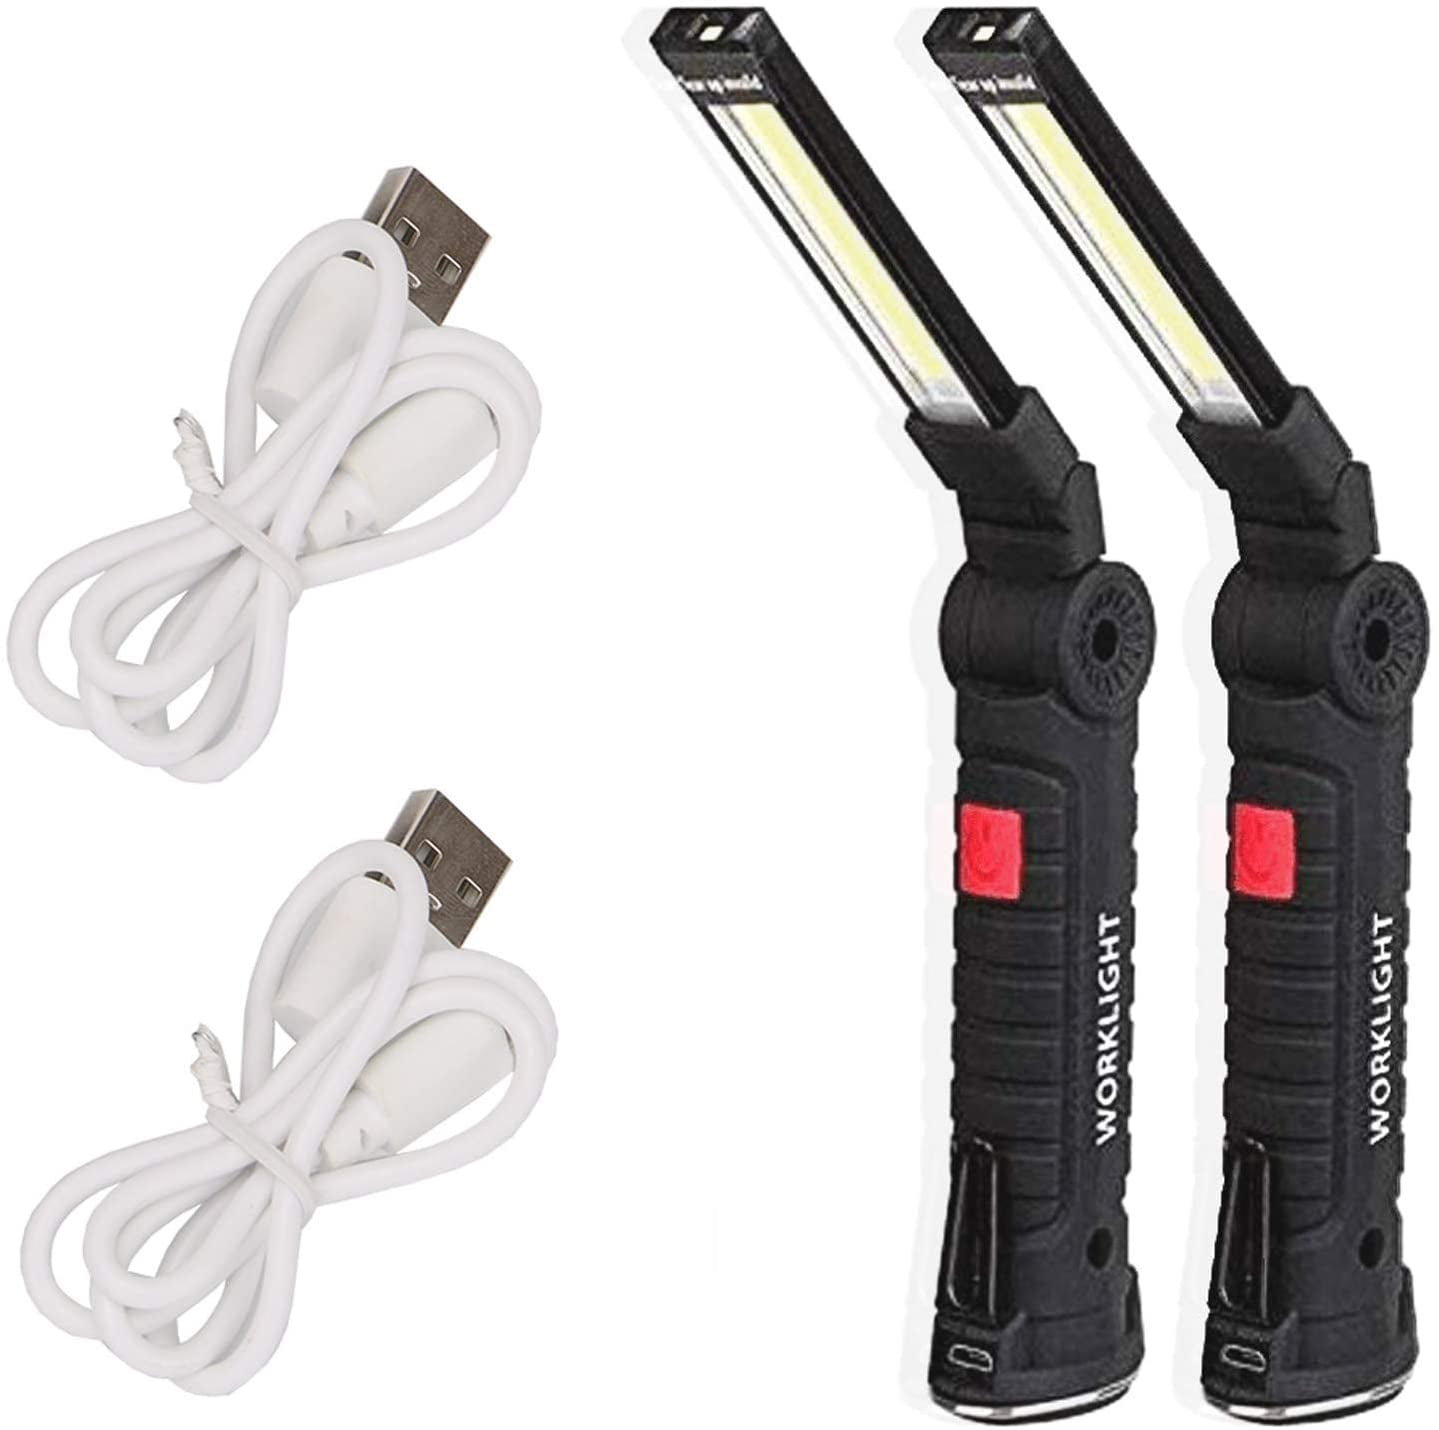 USB COB LED Work Light Garage Mechanics Rechargeable Torch Lamp Tools Supplies 